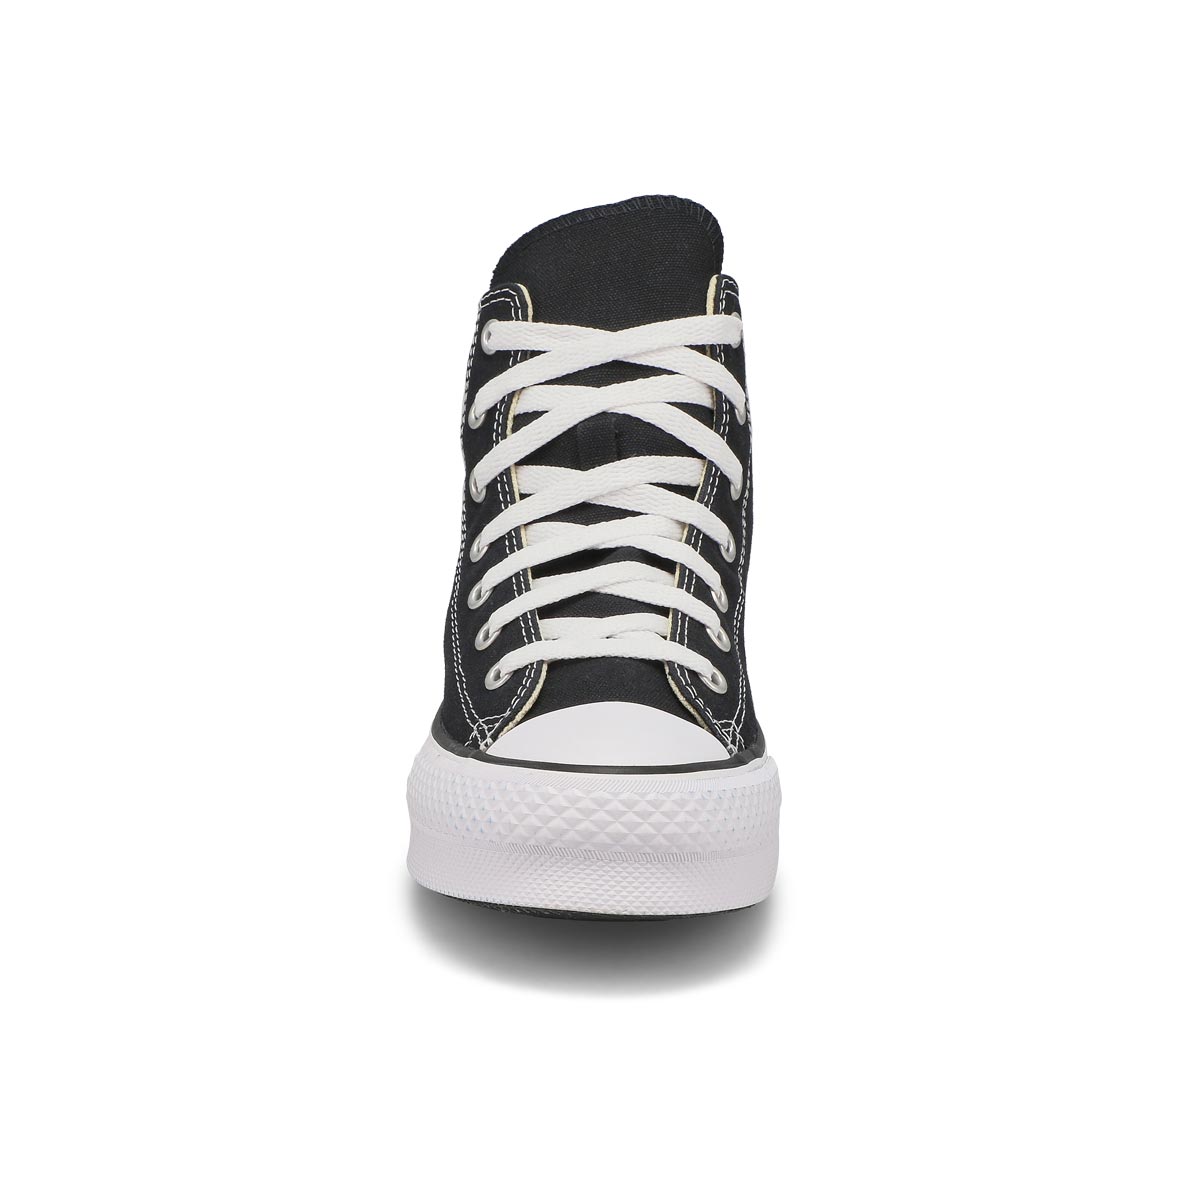 Kids' Chuck Taylor All Star Eva Lift Hi Top Platform Sneaker - Black/White